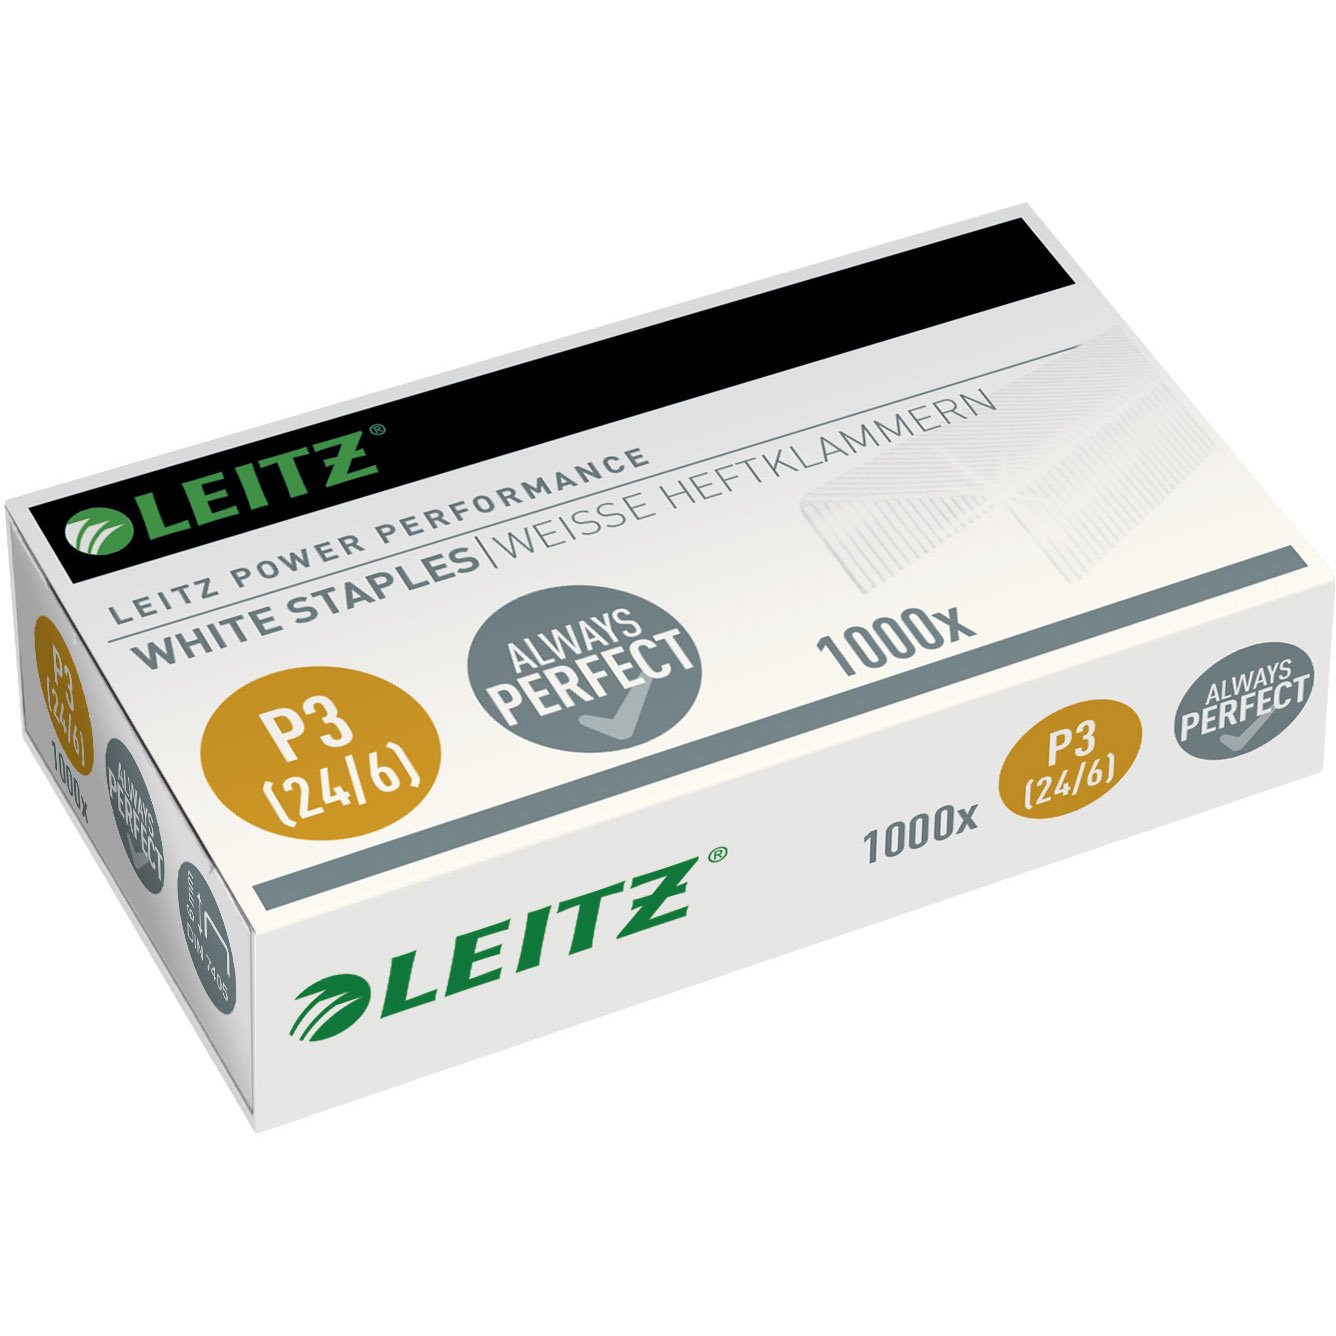 Leitz Power Performance hæfteklammer 24/6 P3